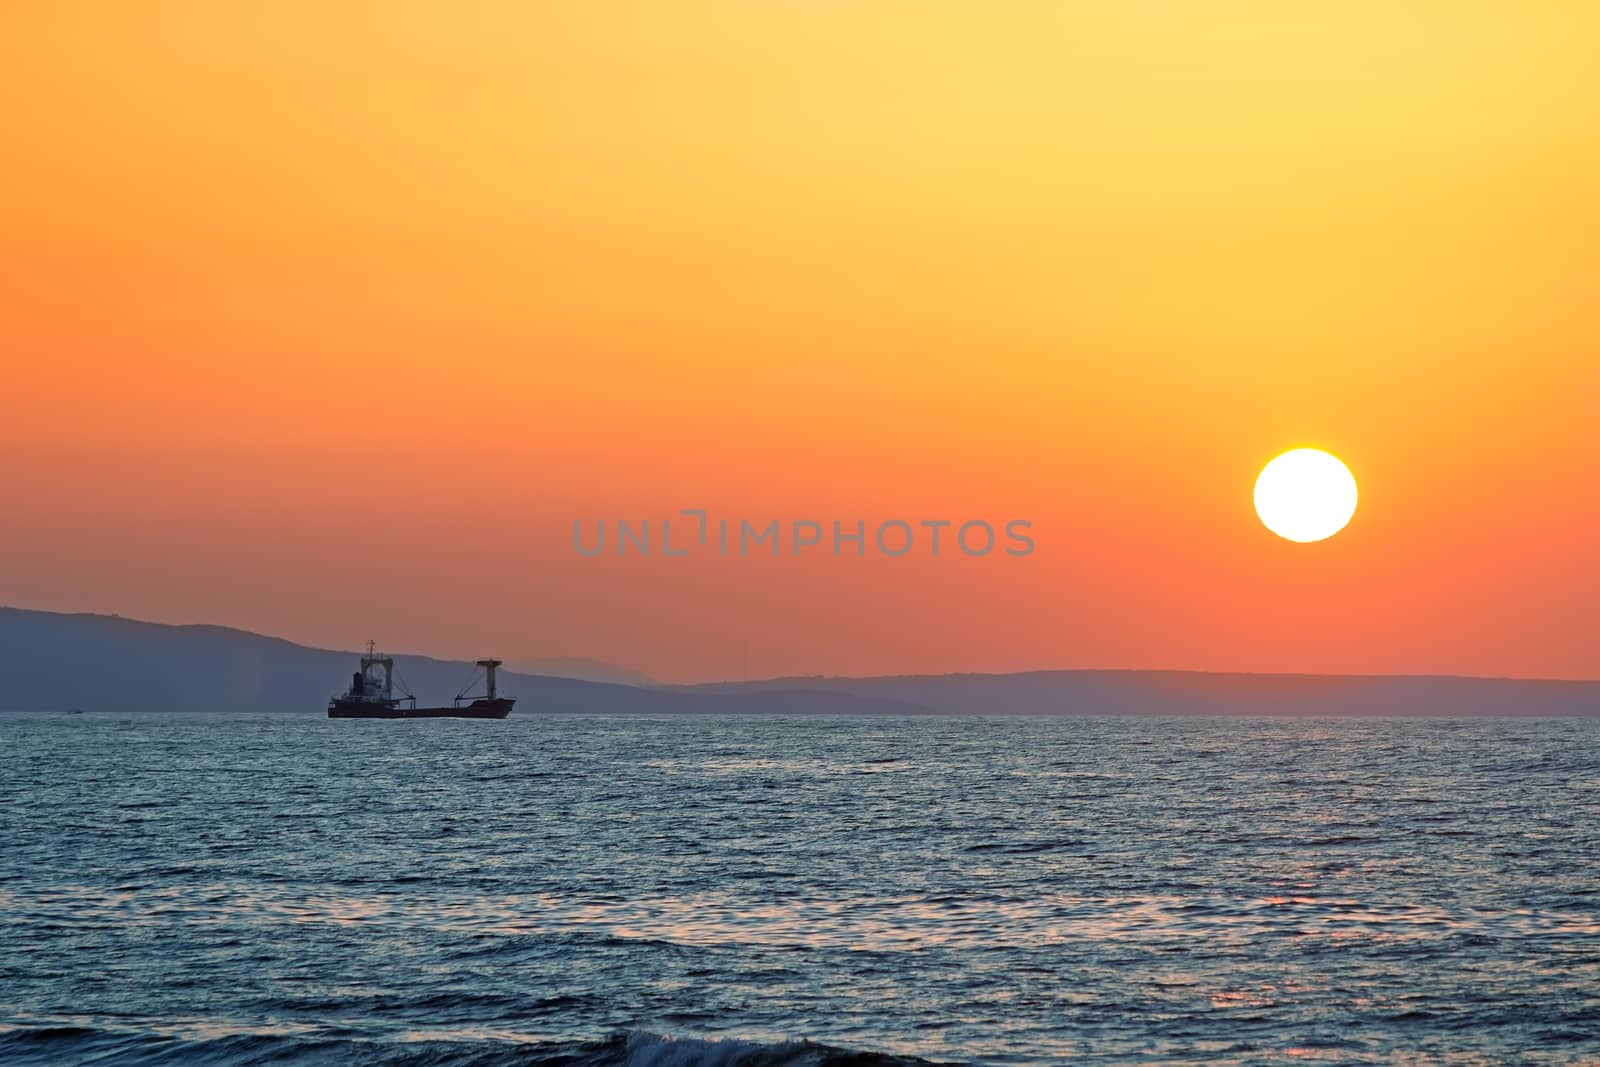 Sunset at sea off the coast of the Mediterranean sea.